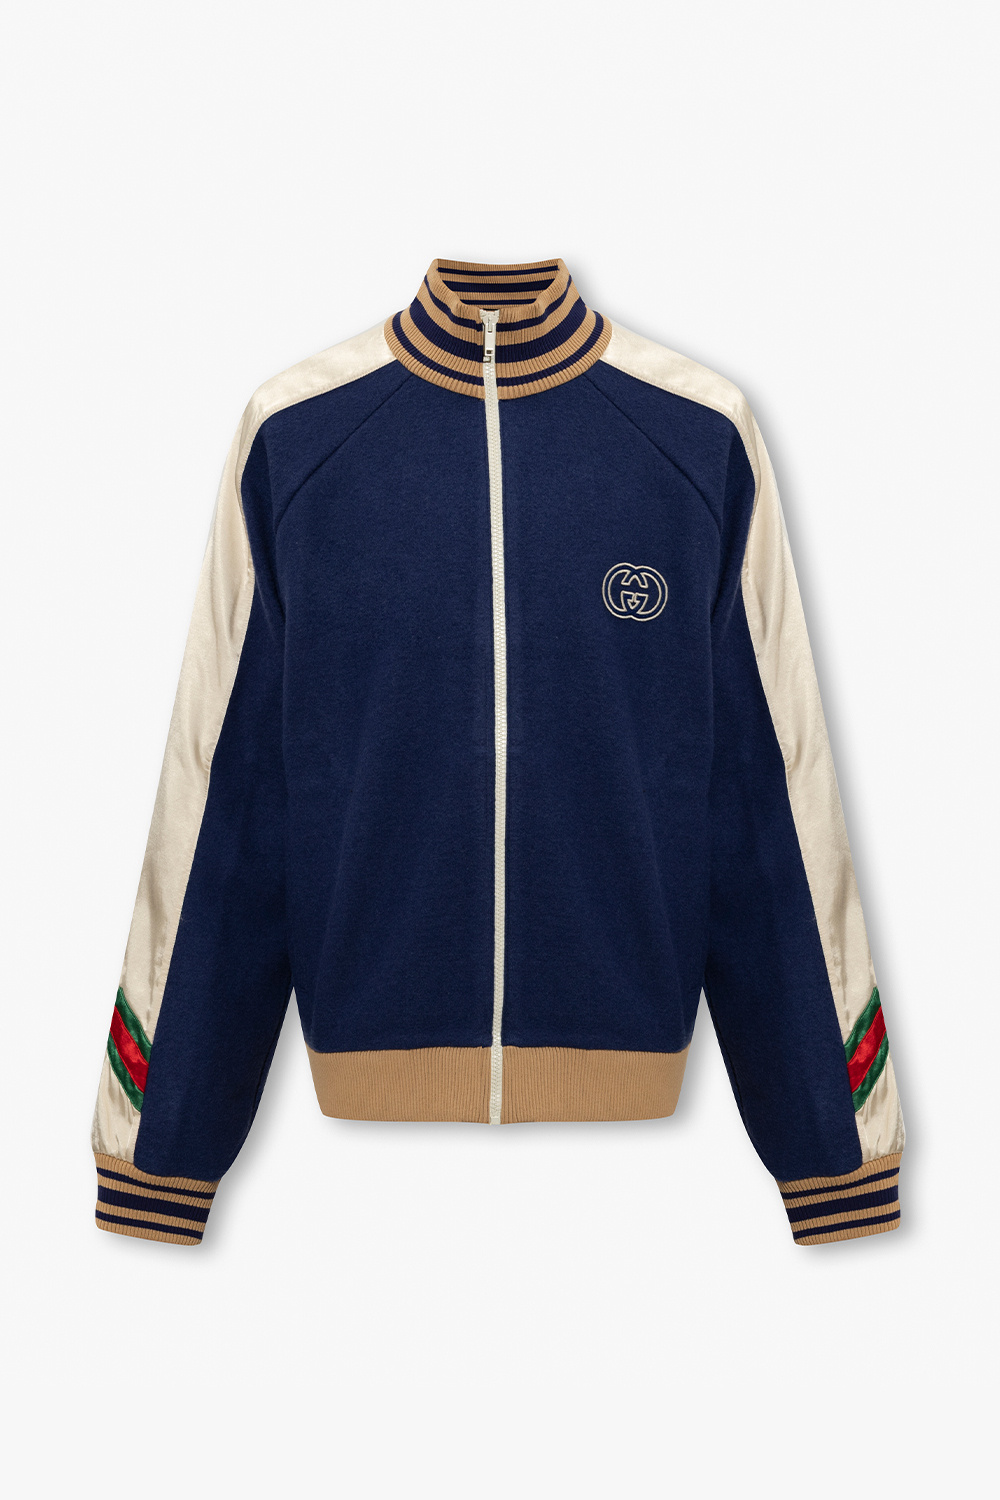 Gucci Wool sweatshirt with logo